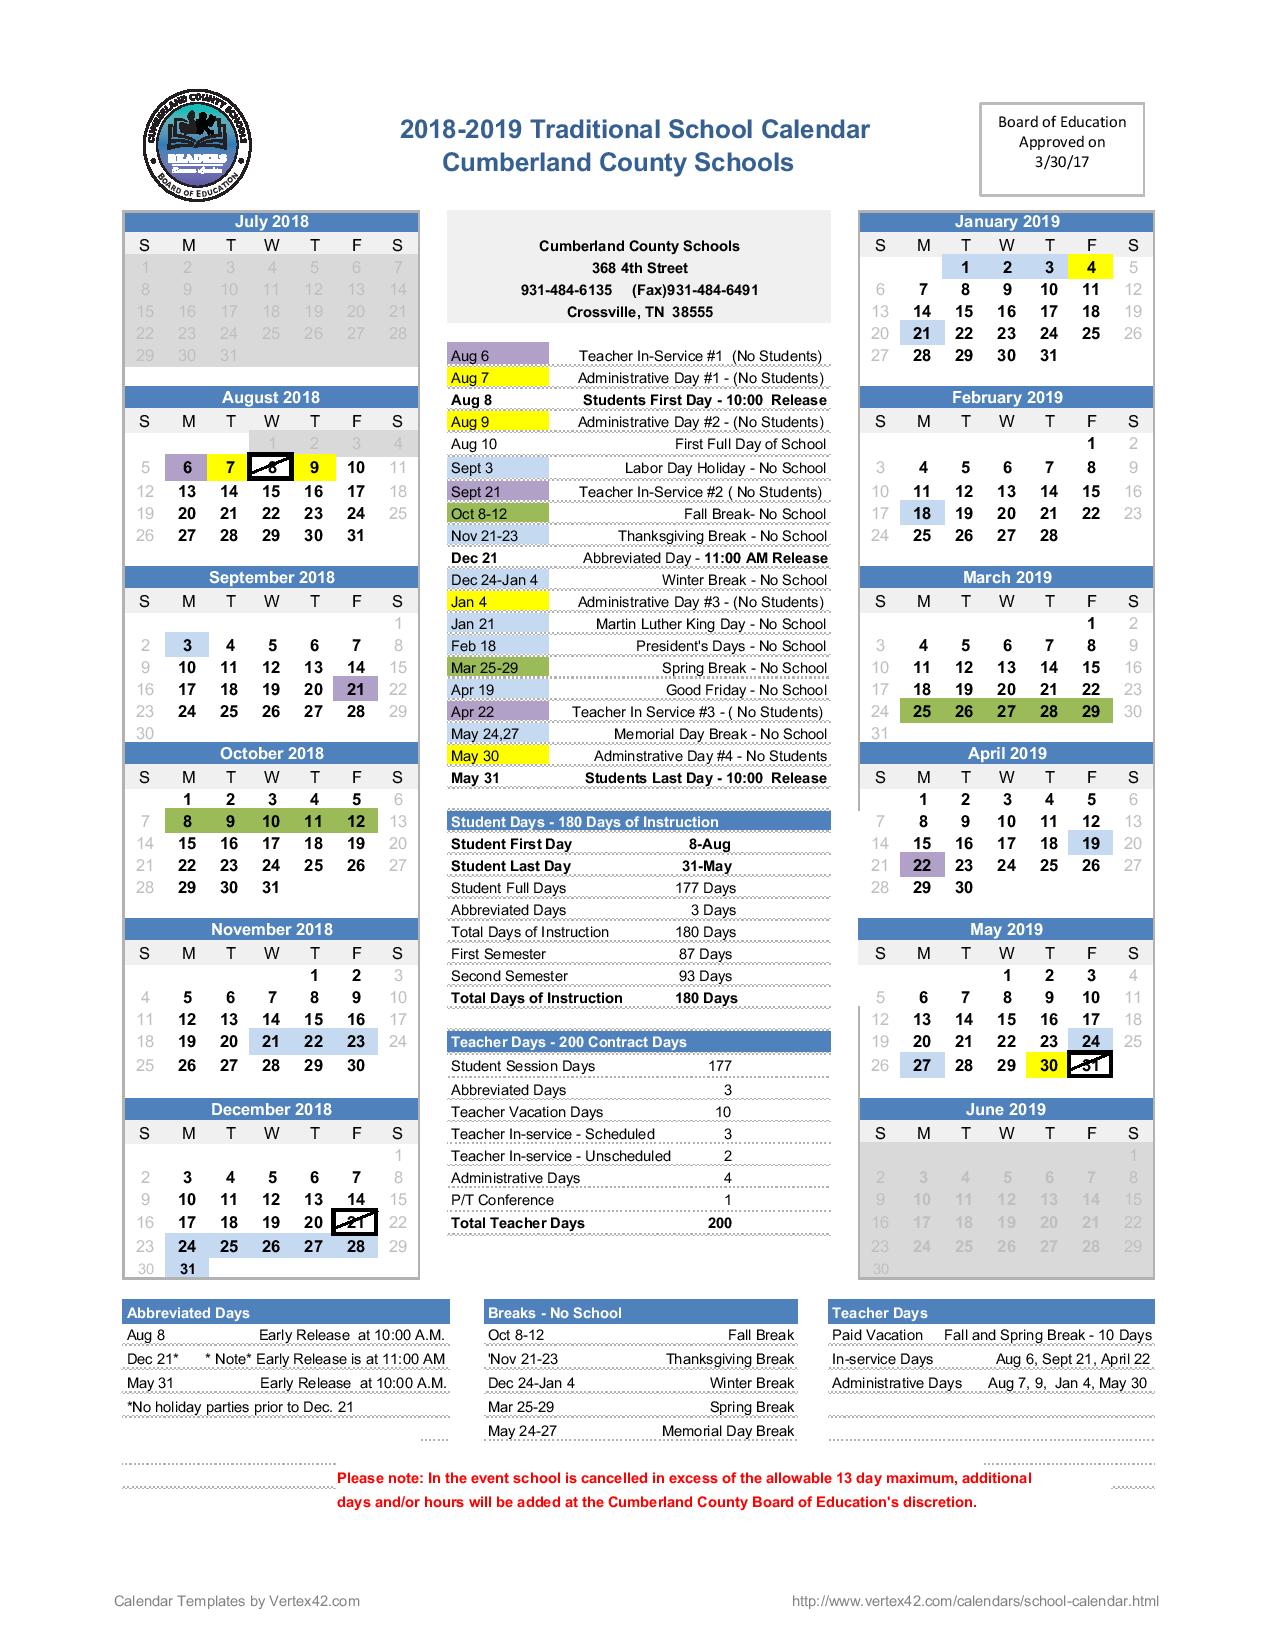 Tennessee Tech Academic Calendar Customize and Print